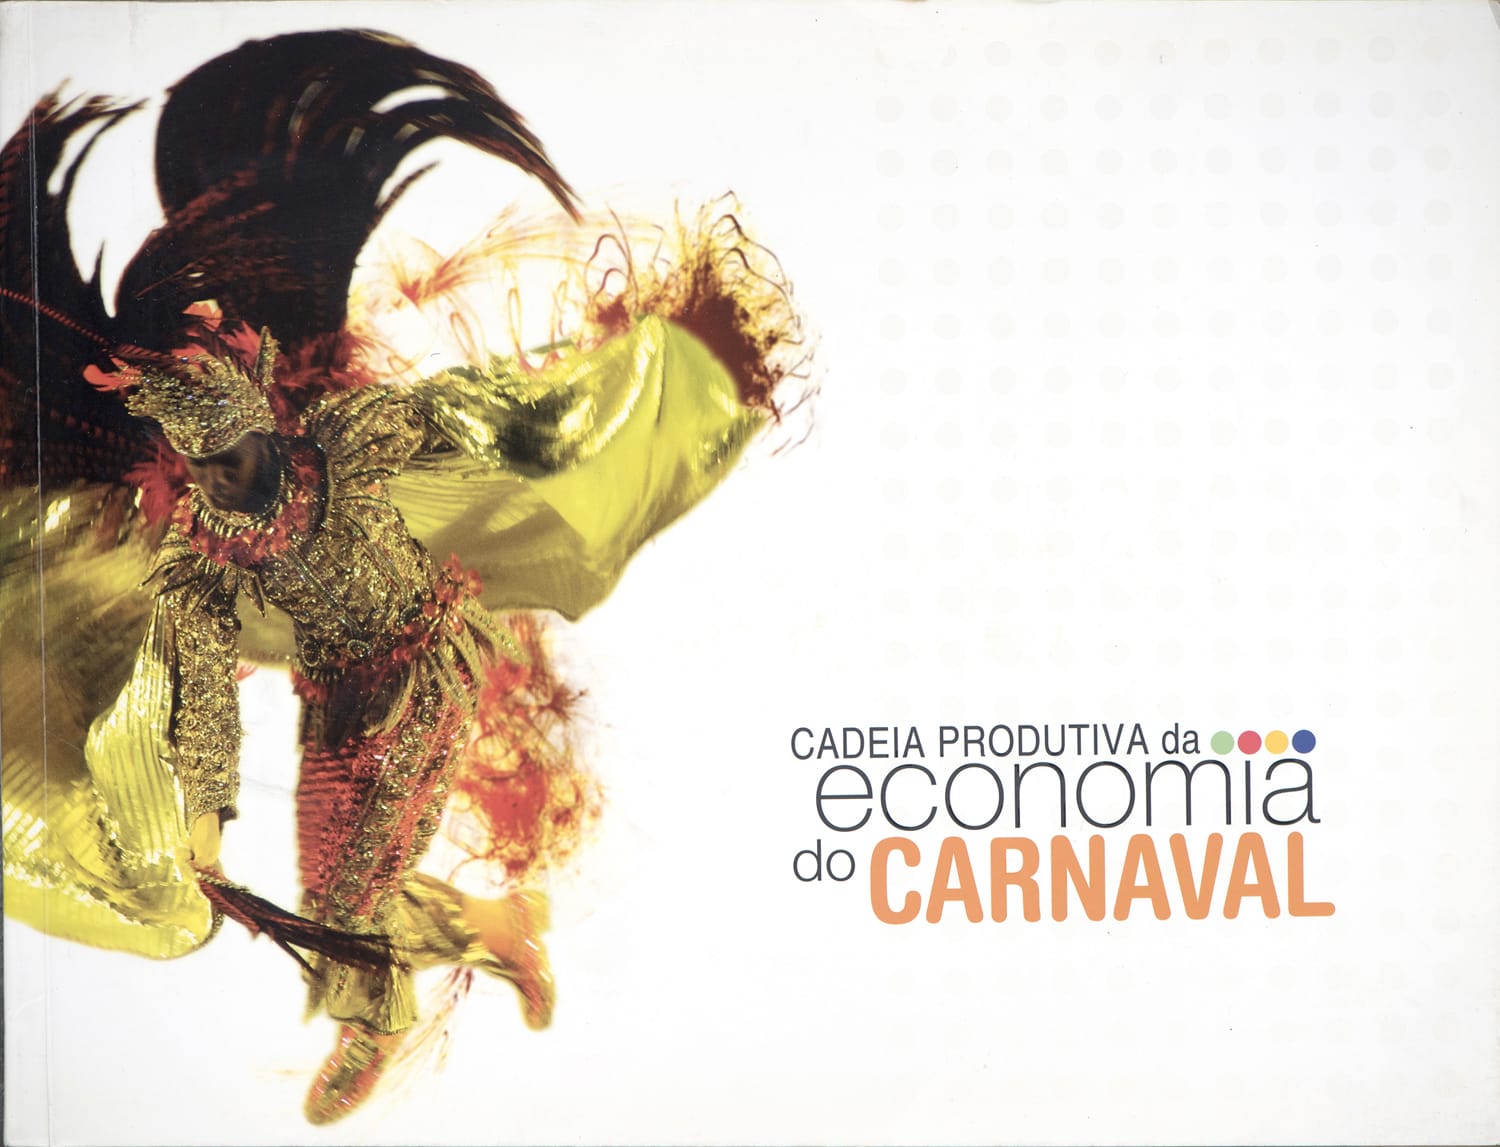 Economia do Carnaval, E-papers, Brasil 2009